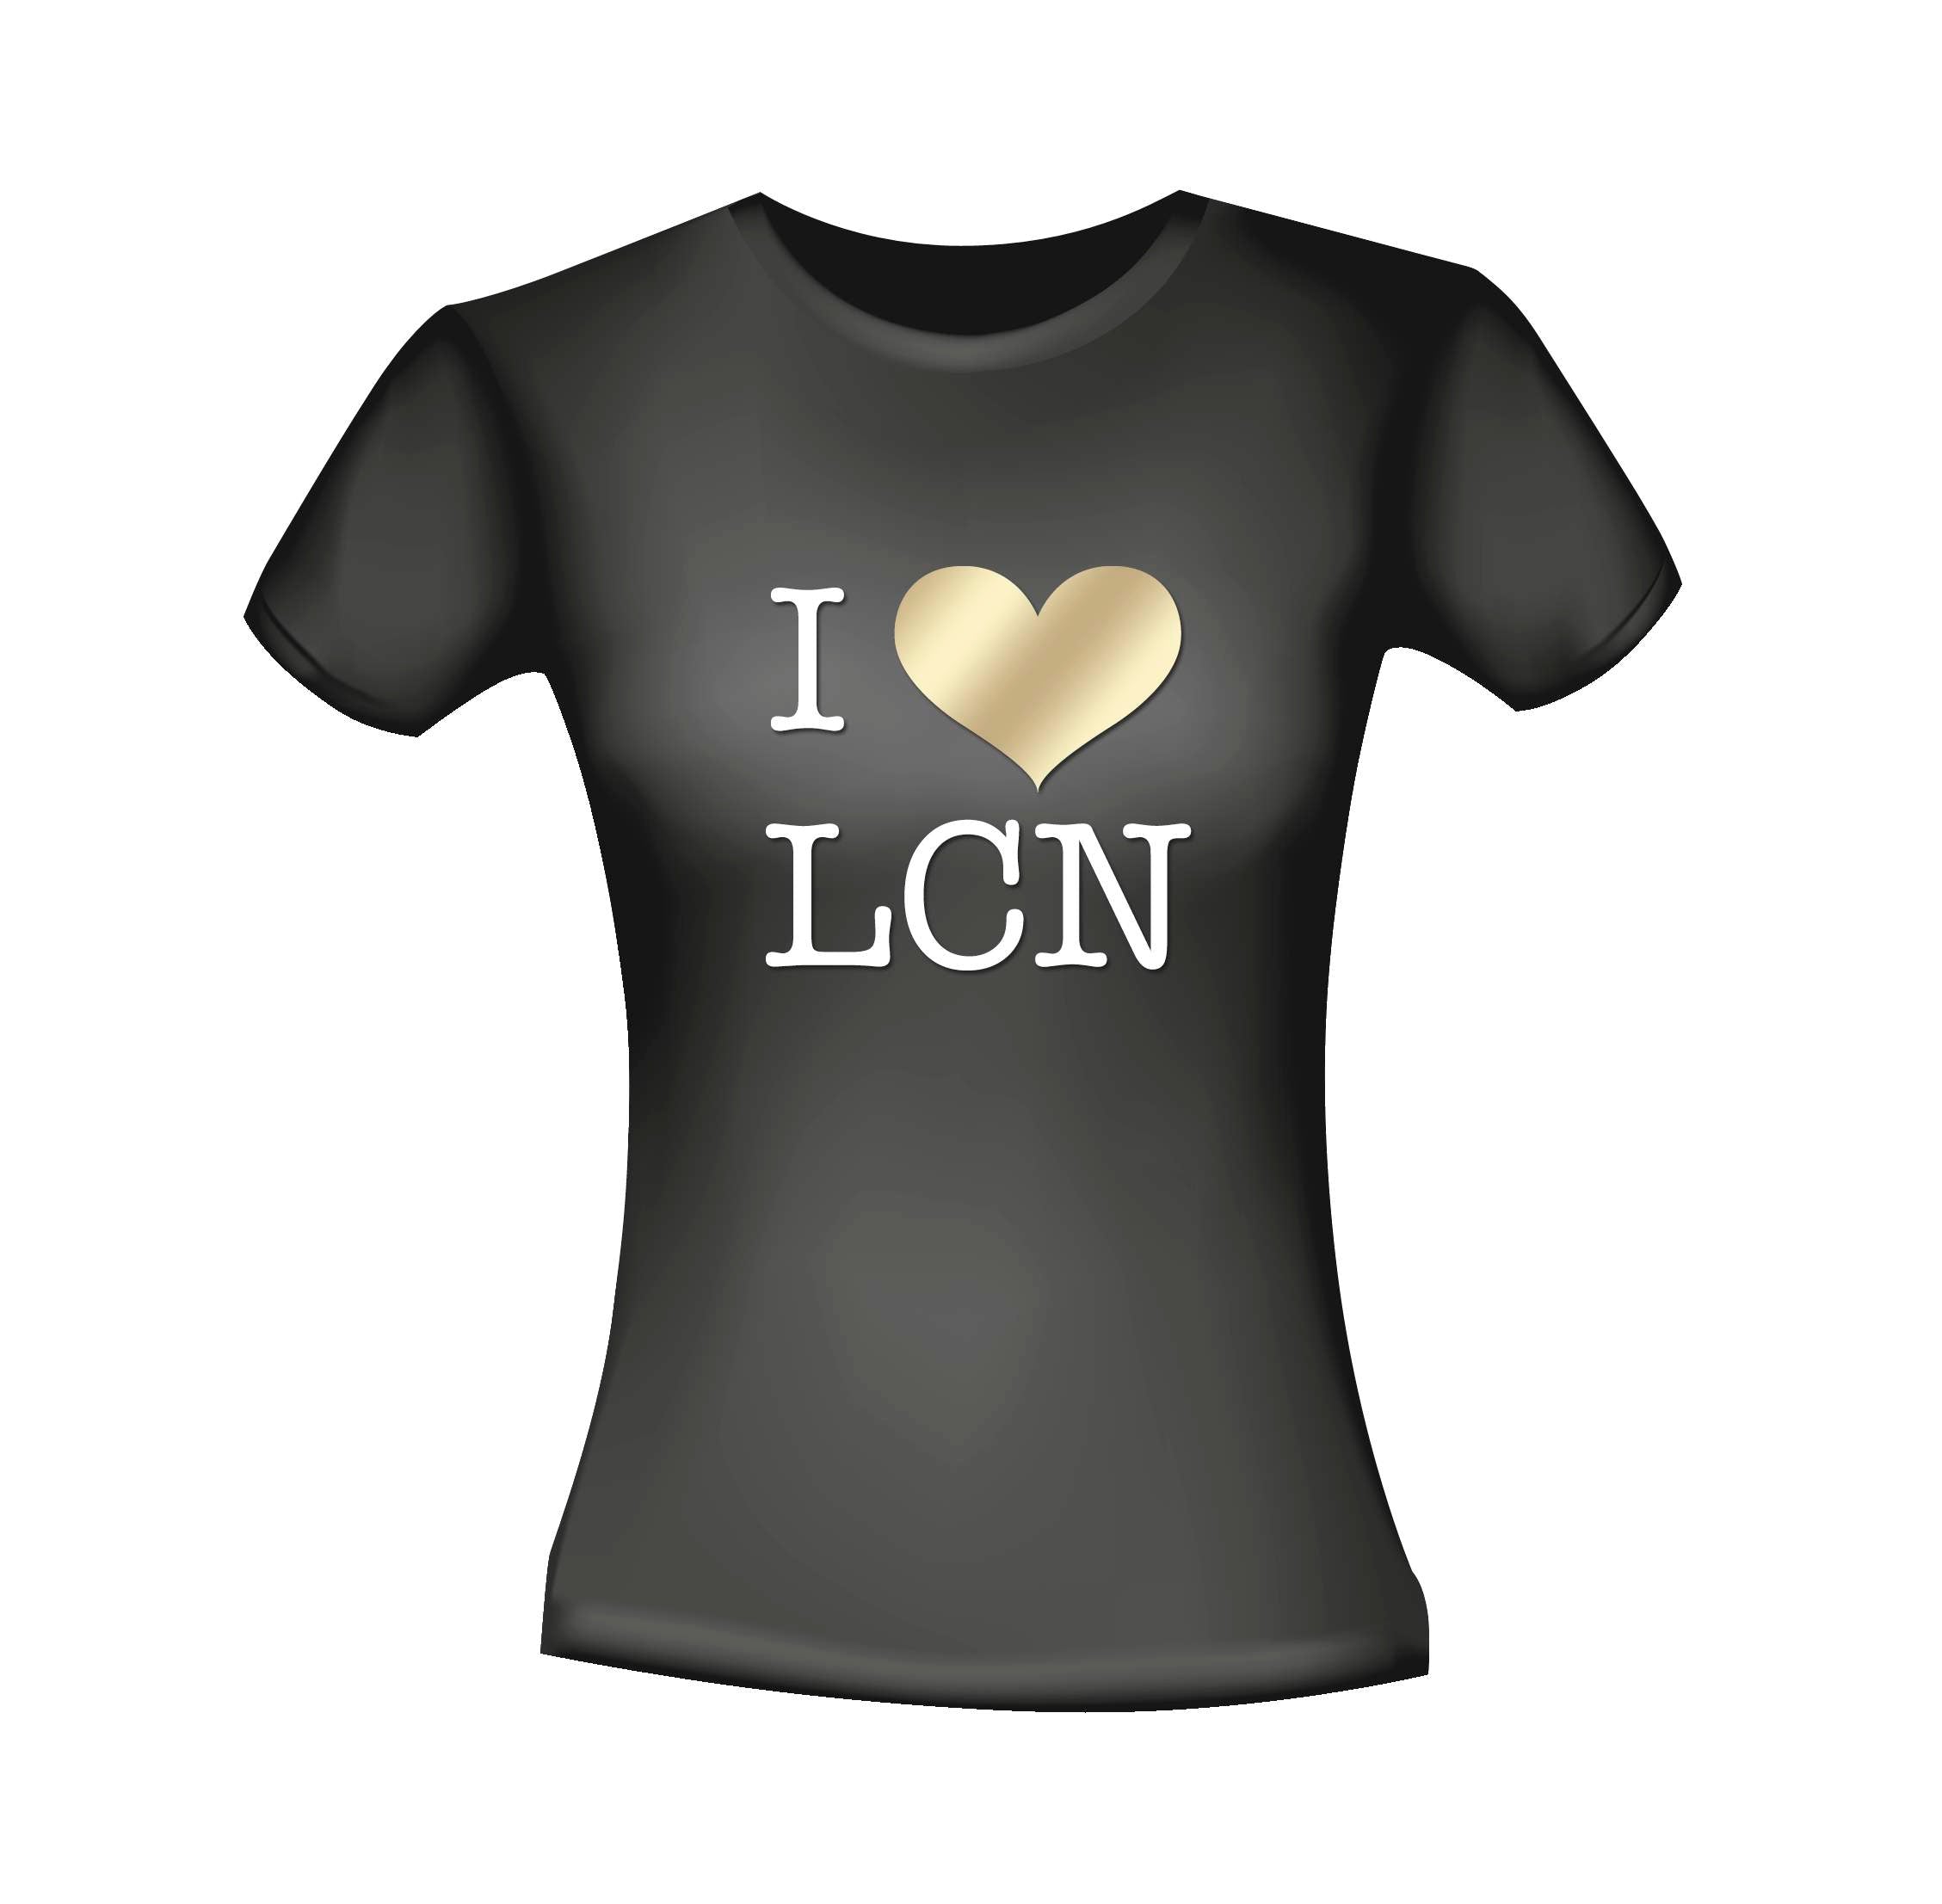 I love LCN black T-Shirt  M*